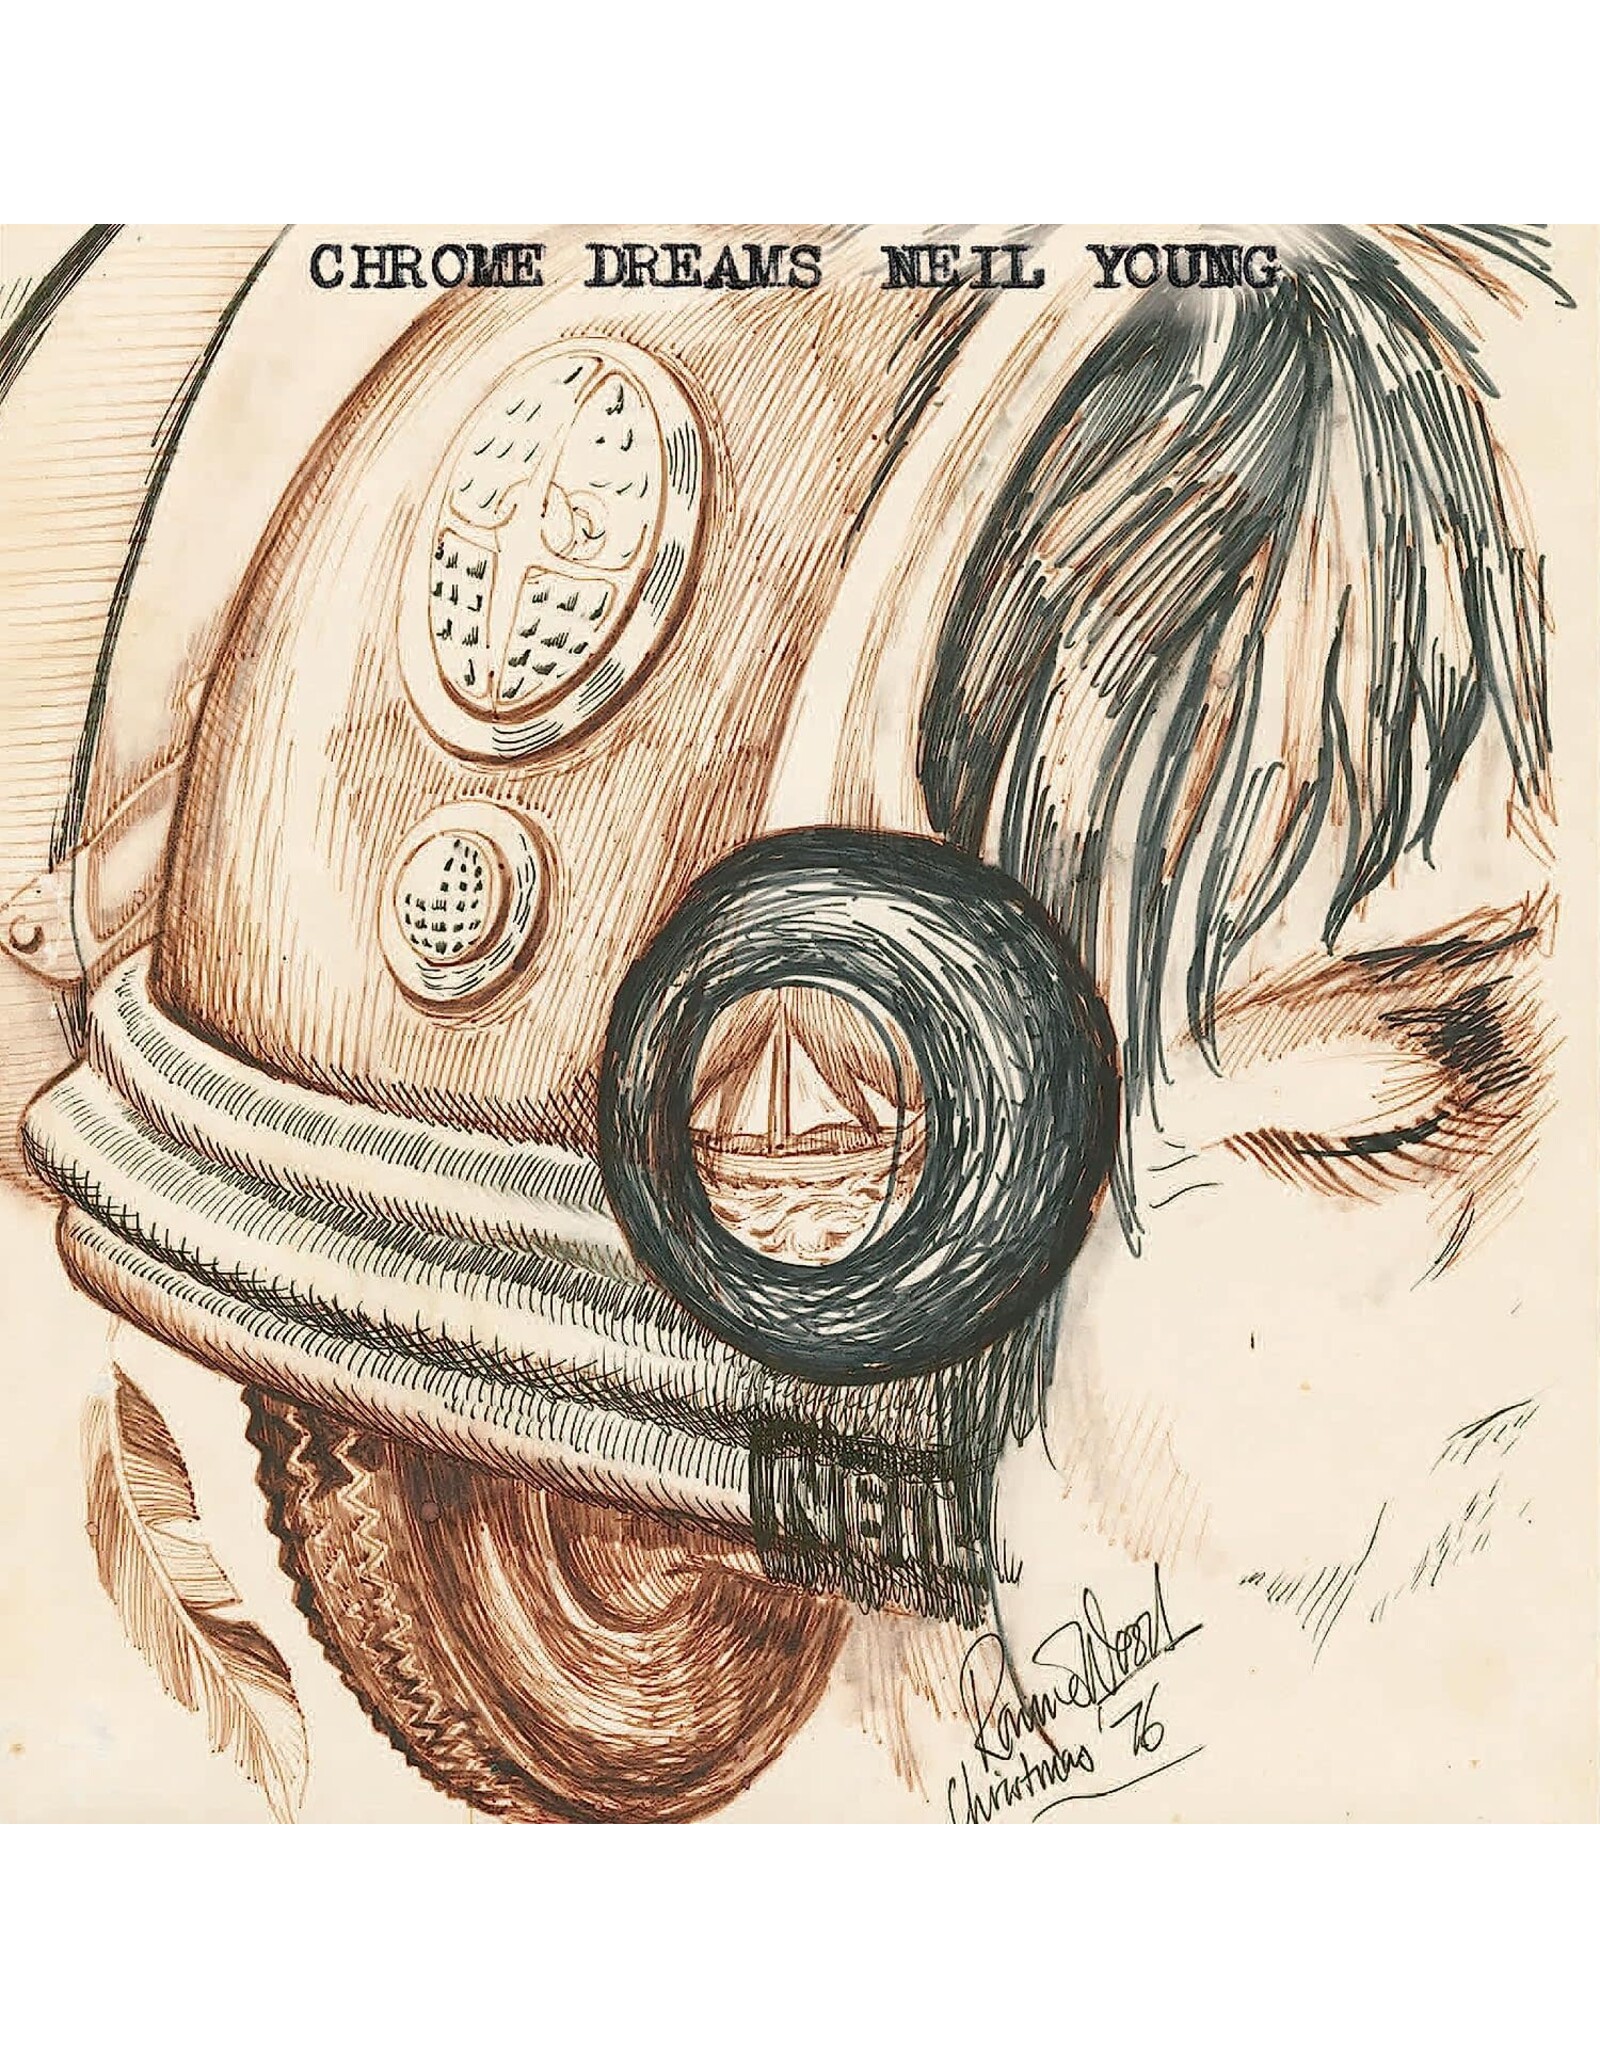 Neil Young - Chrome Dreams (Lost 1977 Album)